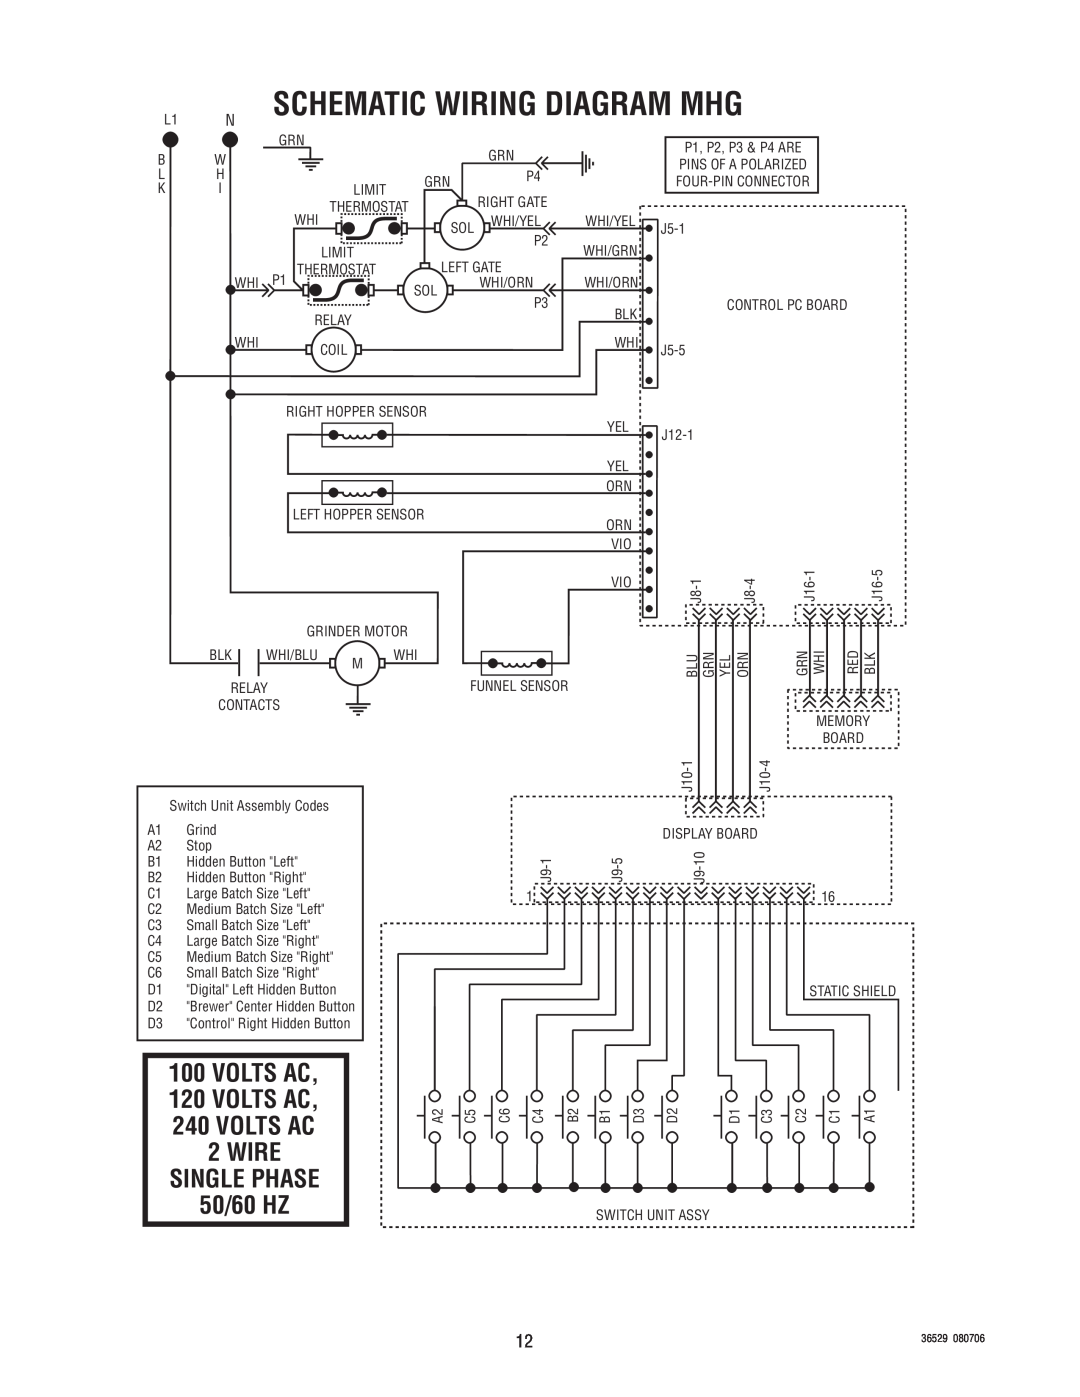 Bunn Dual SH manual Schematic Wiring Diagram Mhg, VOLTS AC 120 VOLTS AC 240 VOLTS AC 2WIRE, SINGLE PHASE 50/60 HZ 